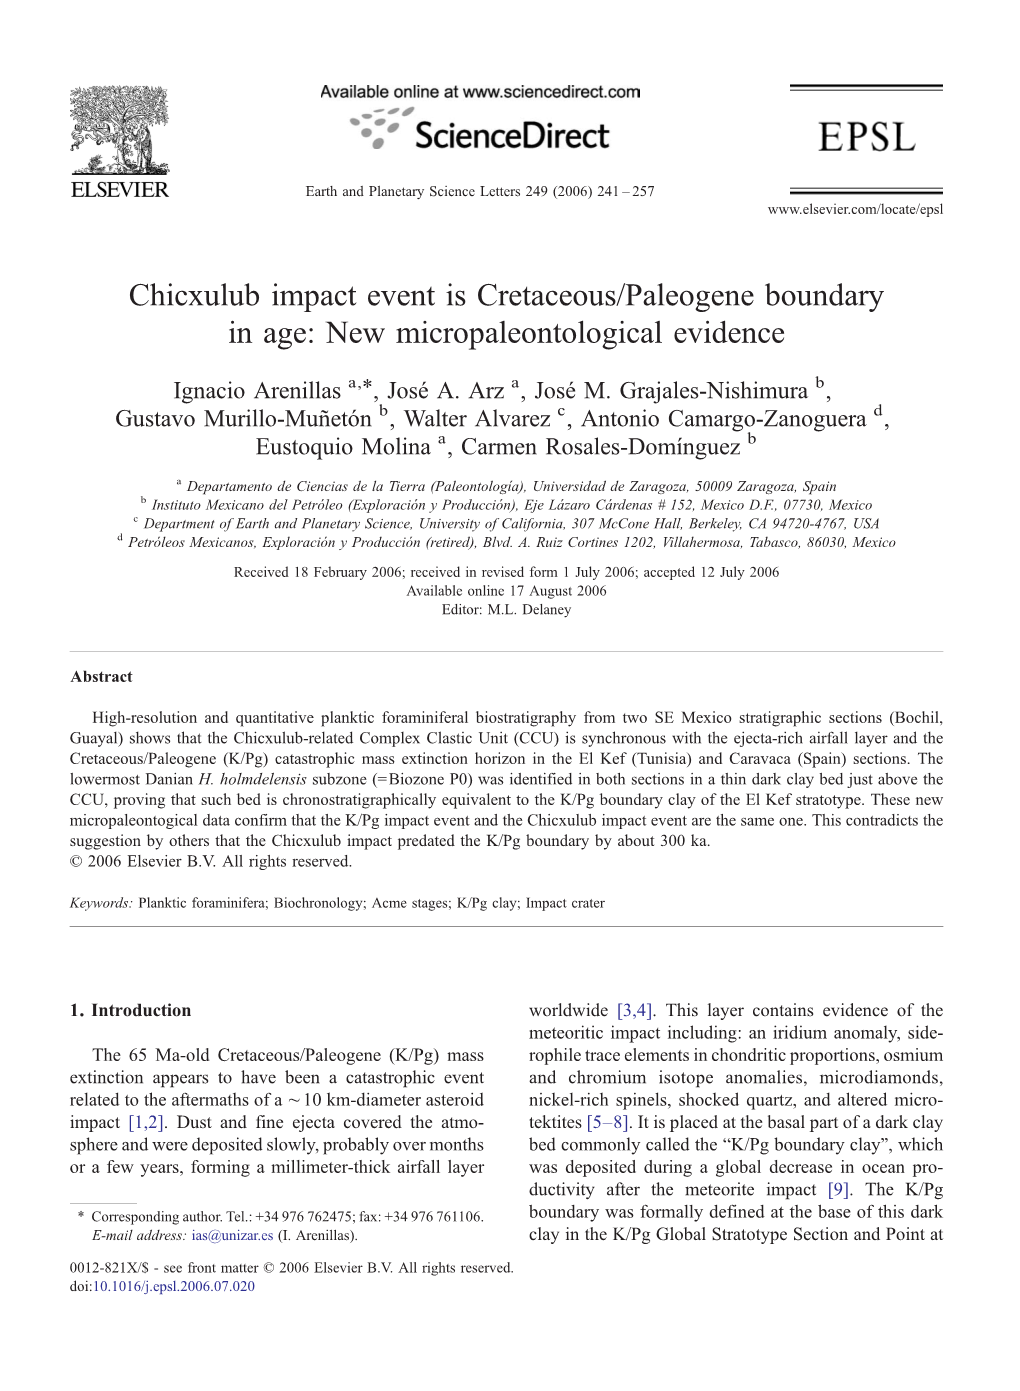 Chicxulub Impact Event Is Cretaceous/Paleogene Boundary in Age: New Micropaleontological Evidence ⁎ Ignacio Arenillas A, , José A